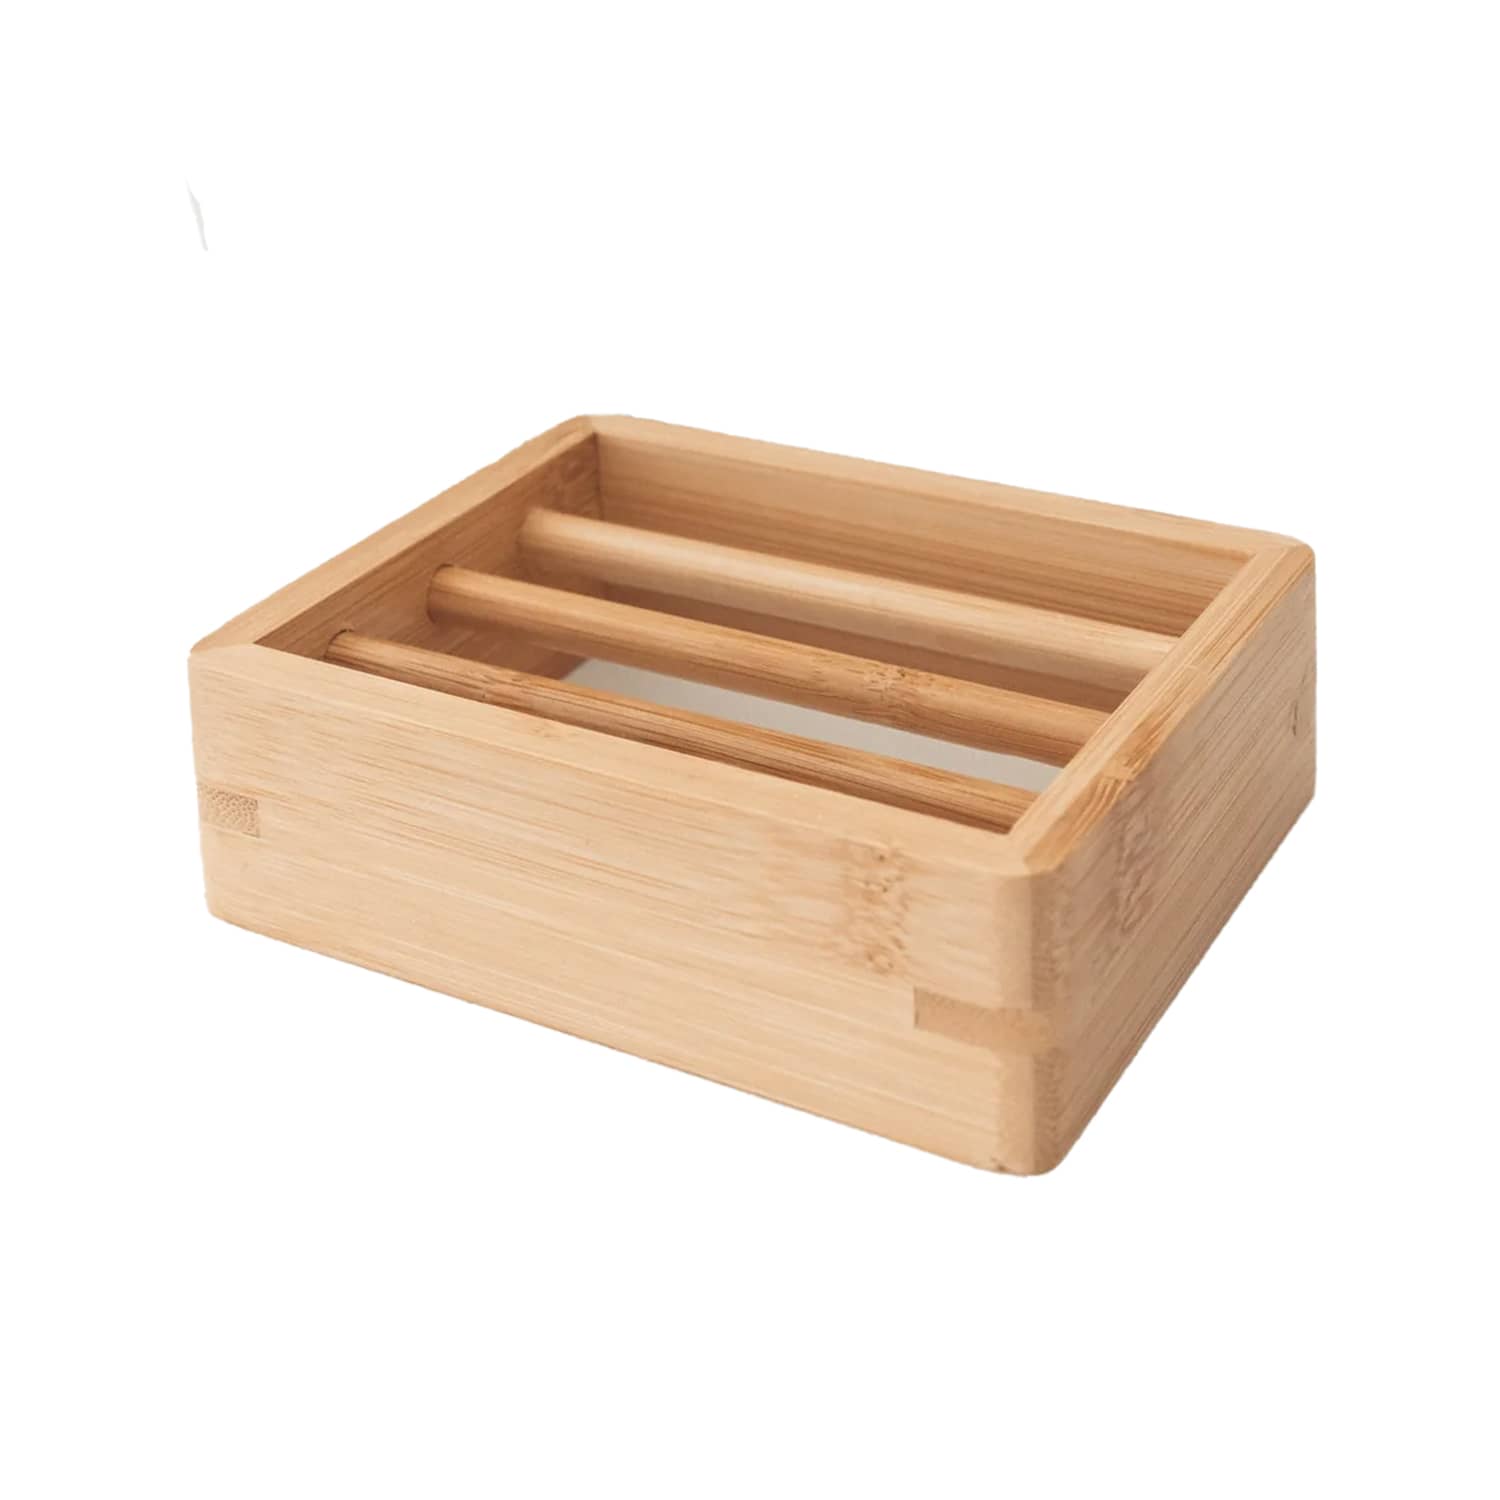 Plenty Soap Dish | Natural Bamboo | Large Shelf